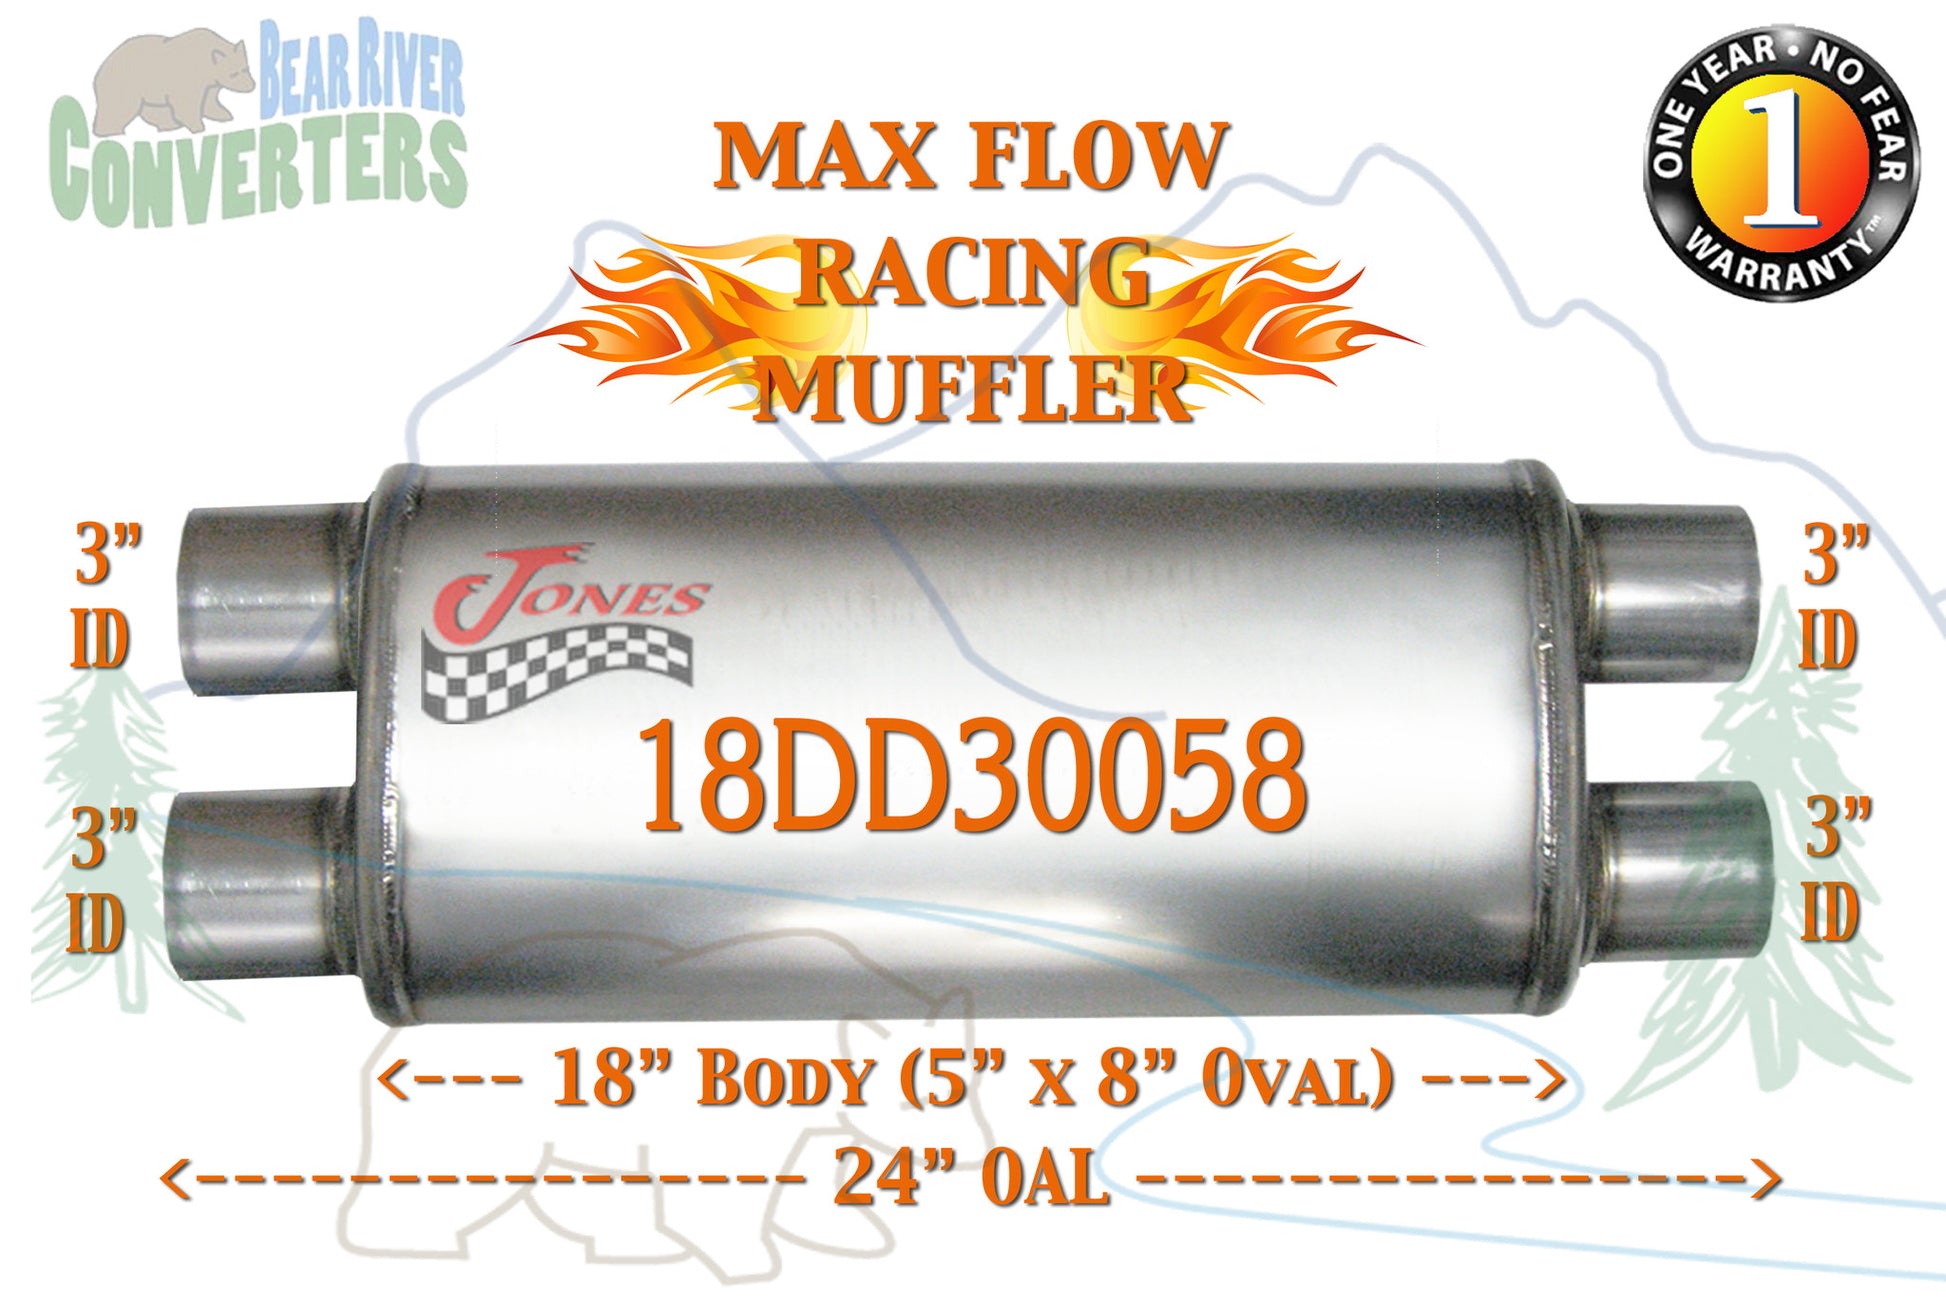 18DD30058 Jones MF2469 Max Flow Racing Muffler 18” Oval Body 3” Pipe Dual/Dual 24” OAL - Bear River Converters